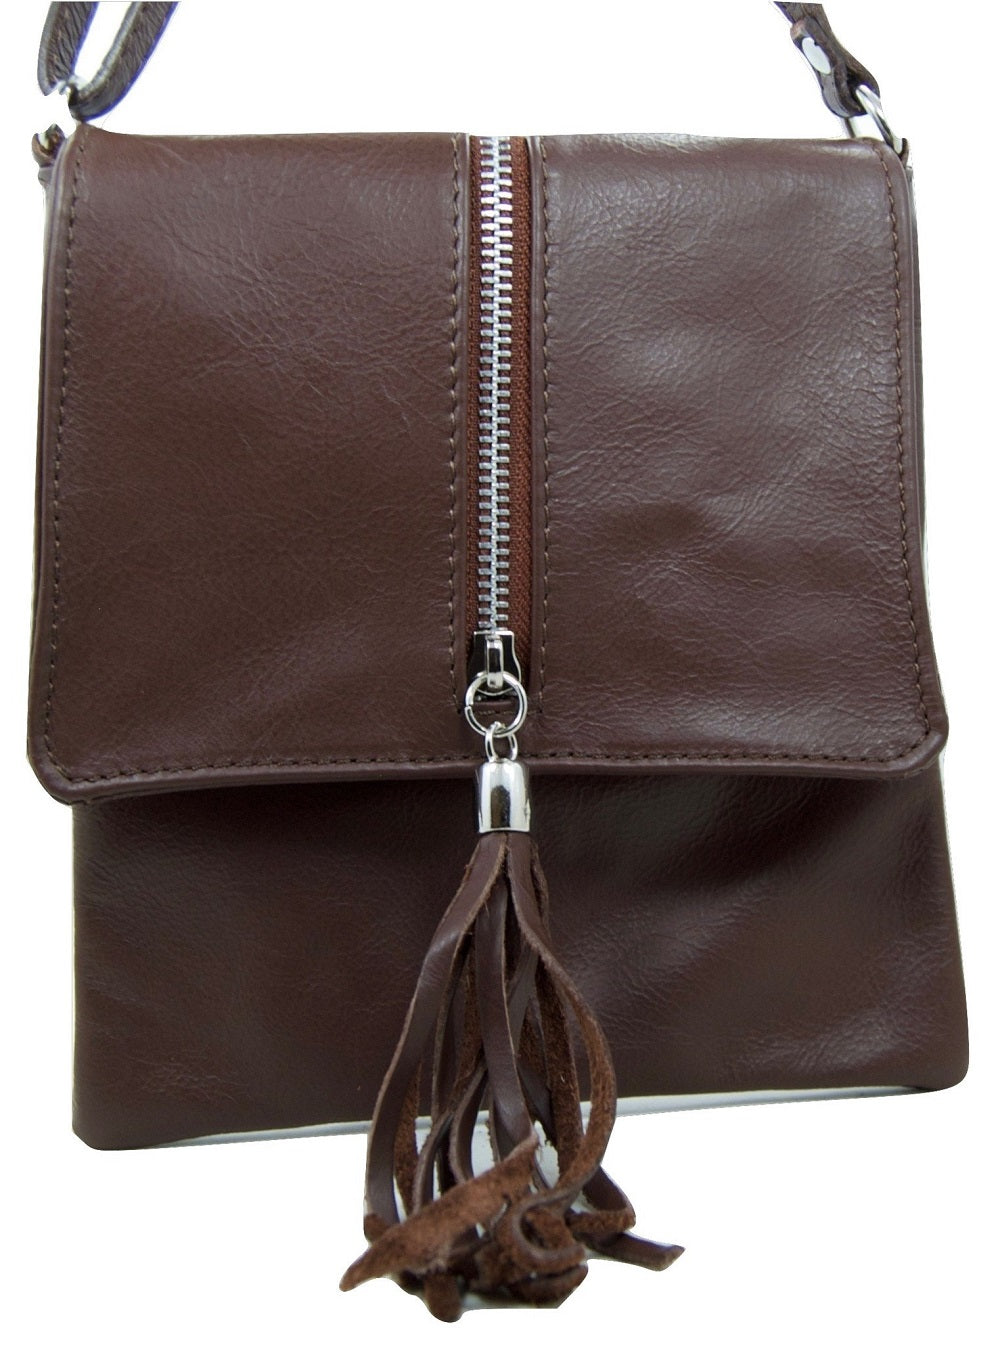 LaGaksta Mini Ultra Soft Italian Leather Crossbody Bag | LaGaksta Handbags